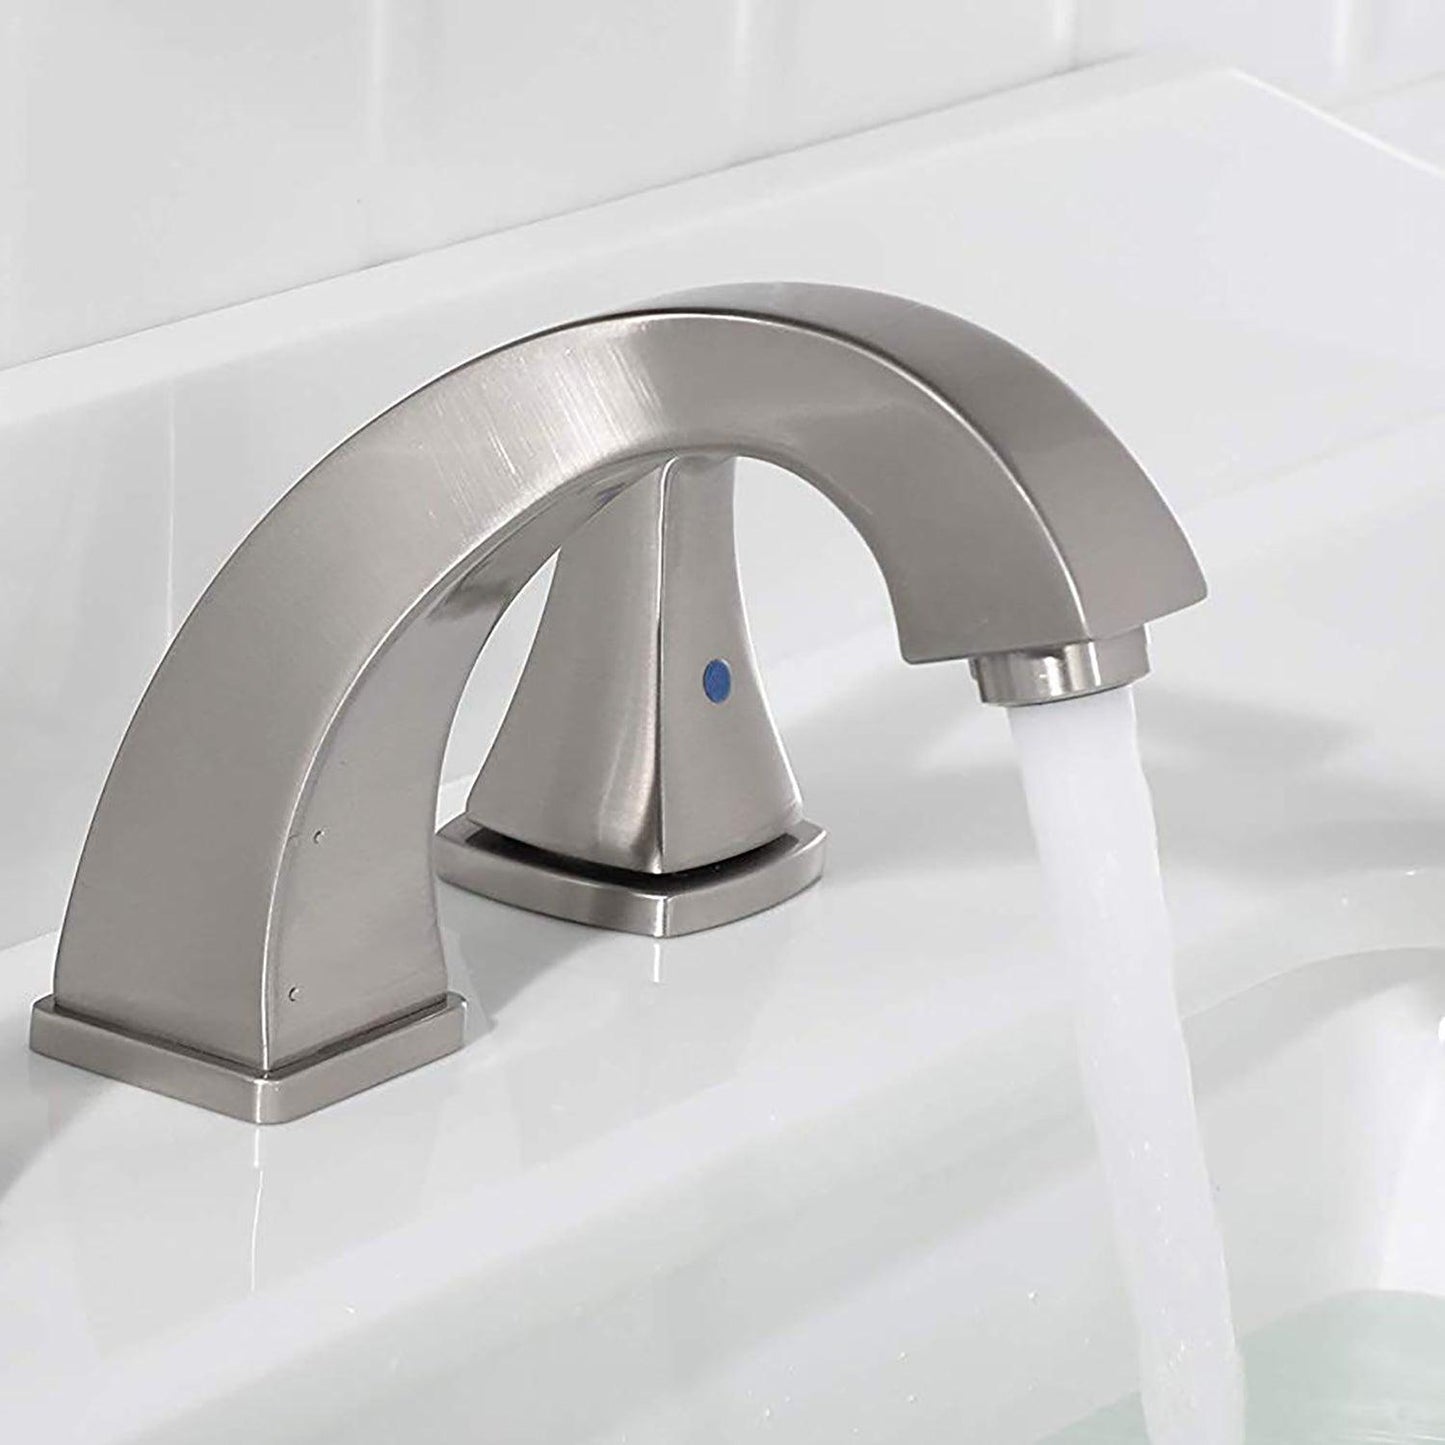 Widespread 2 Handles Bathroom Faucet with Pop Up Sink Drain, Nickel FredCo